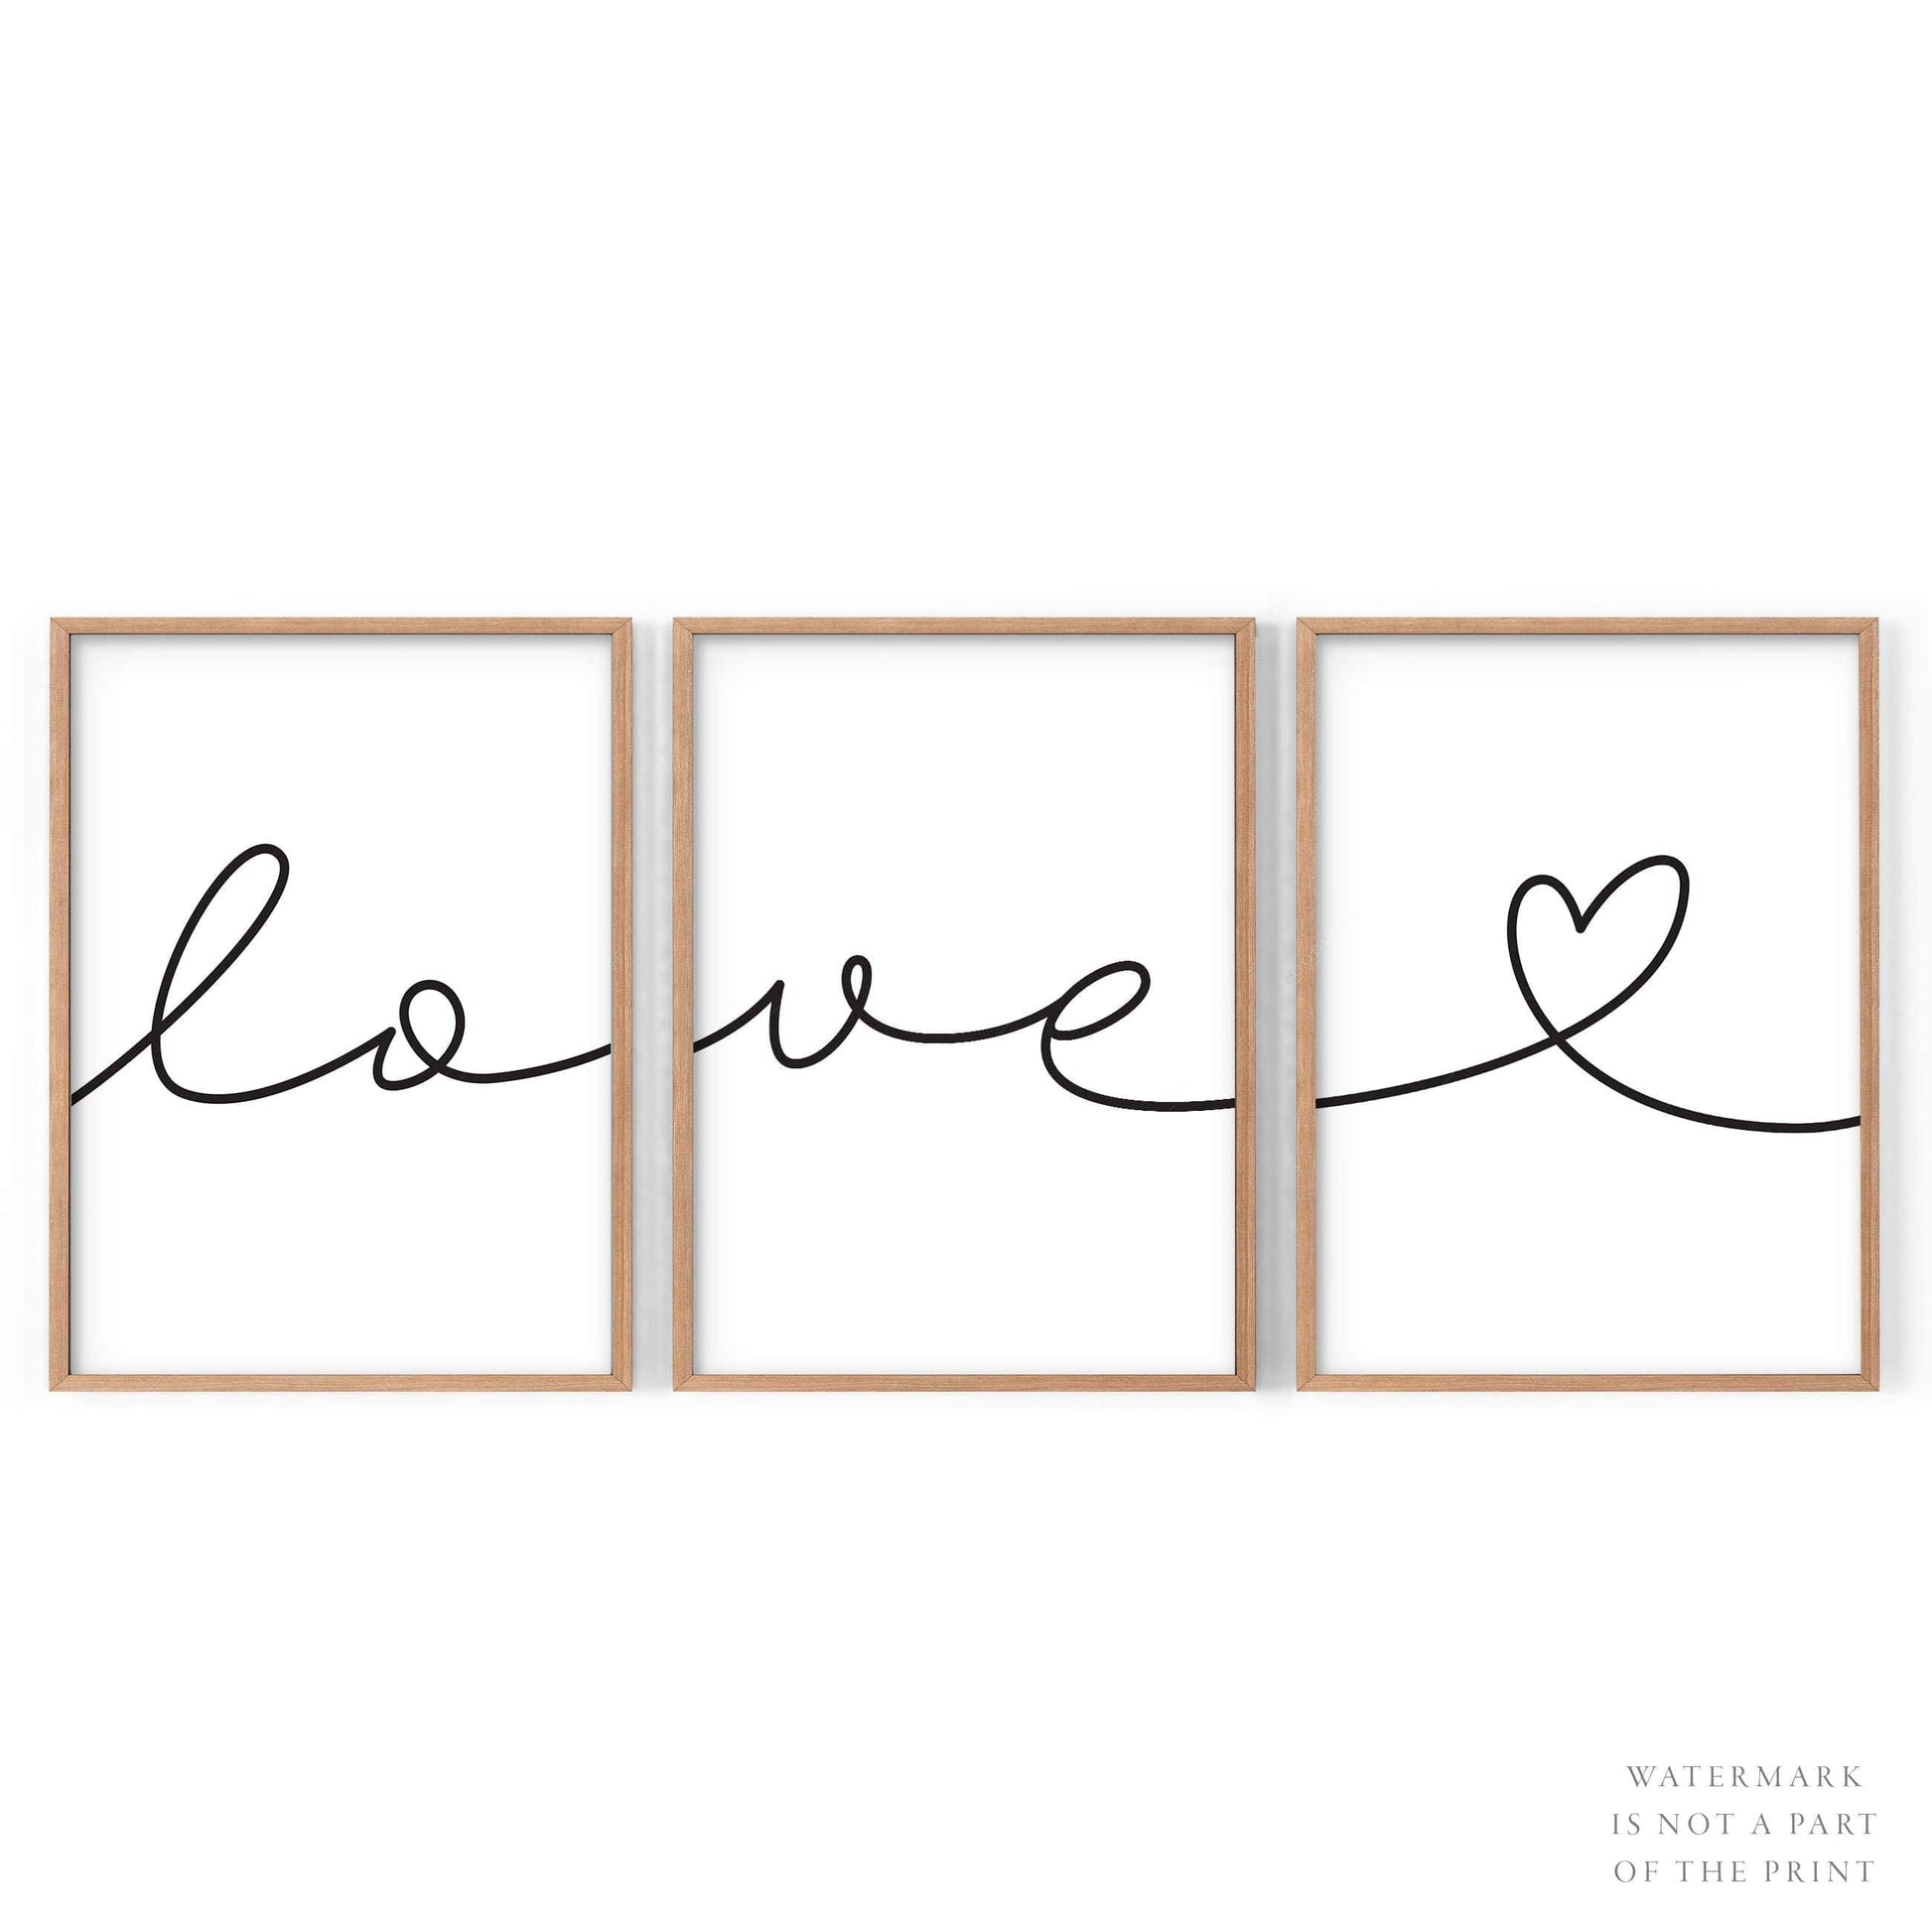 Home Poster Decor Set of 3 Love Print, Bedroom Wall Art, Love Heart Print, Above bed decor, Romantic Decor, Handwriting Love Print, Heart Symbol, Couple Gift